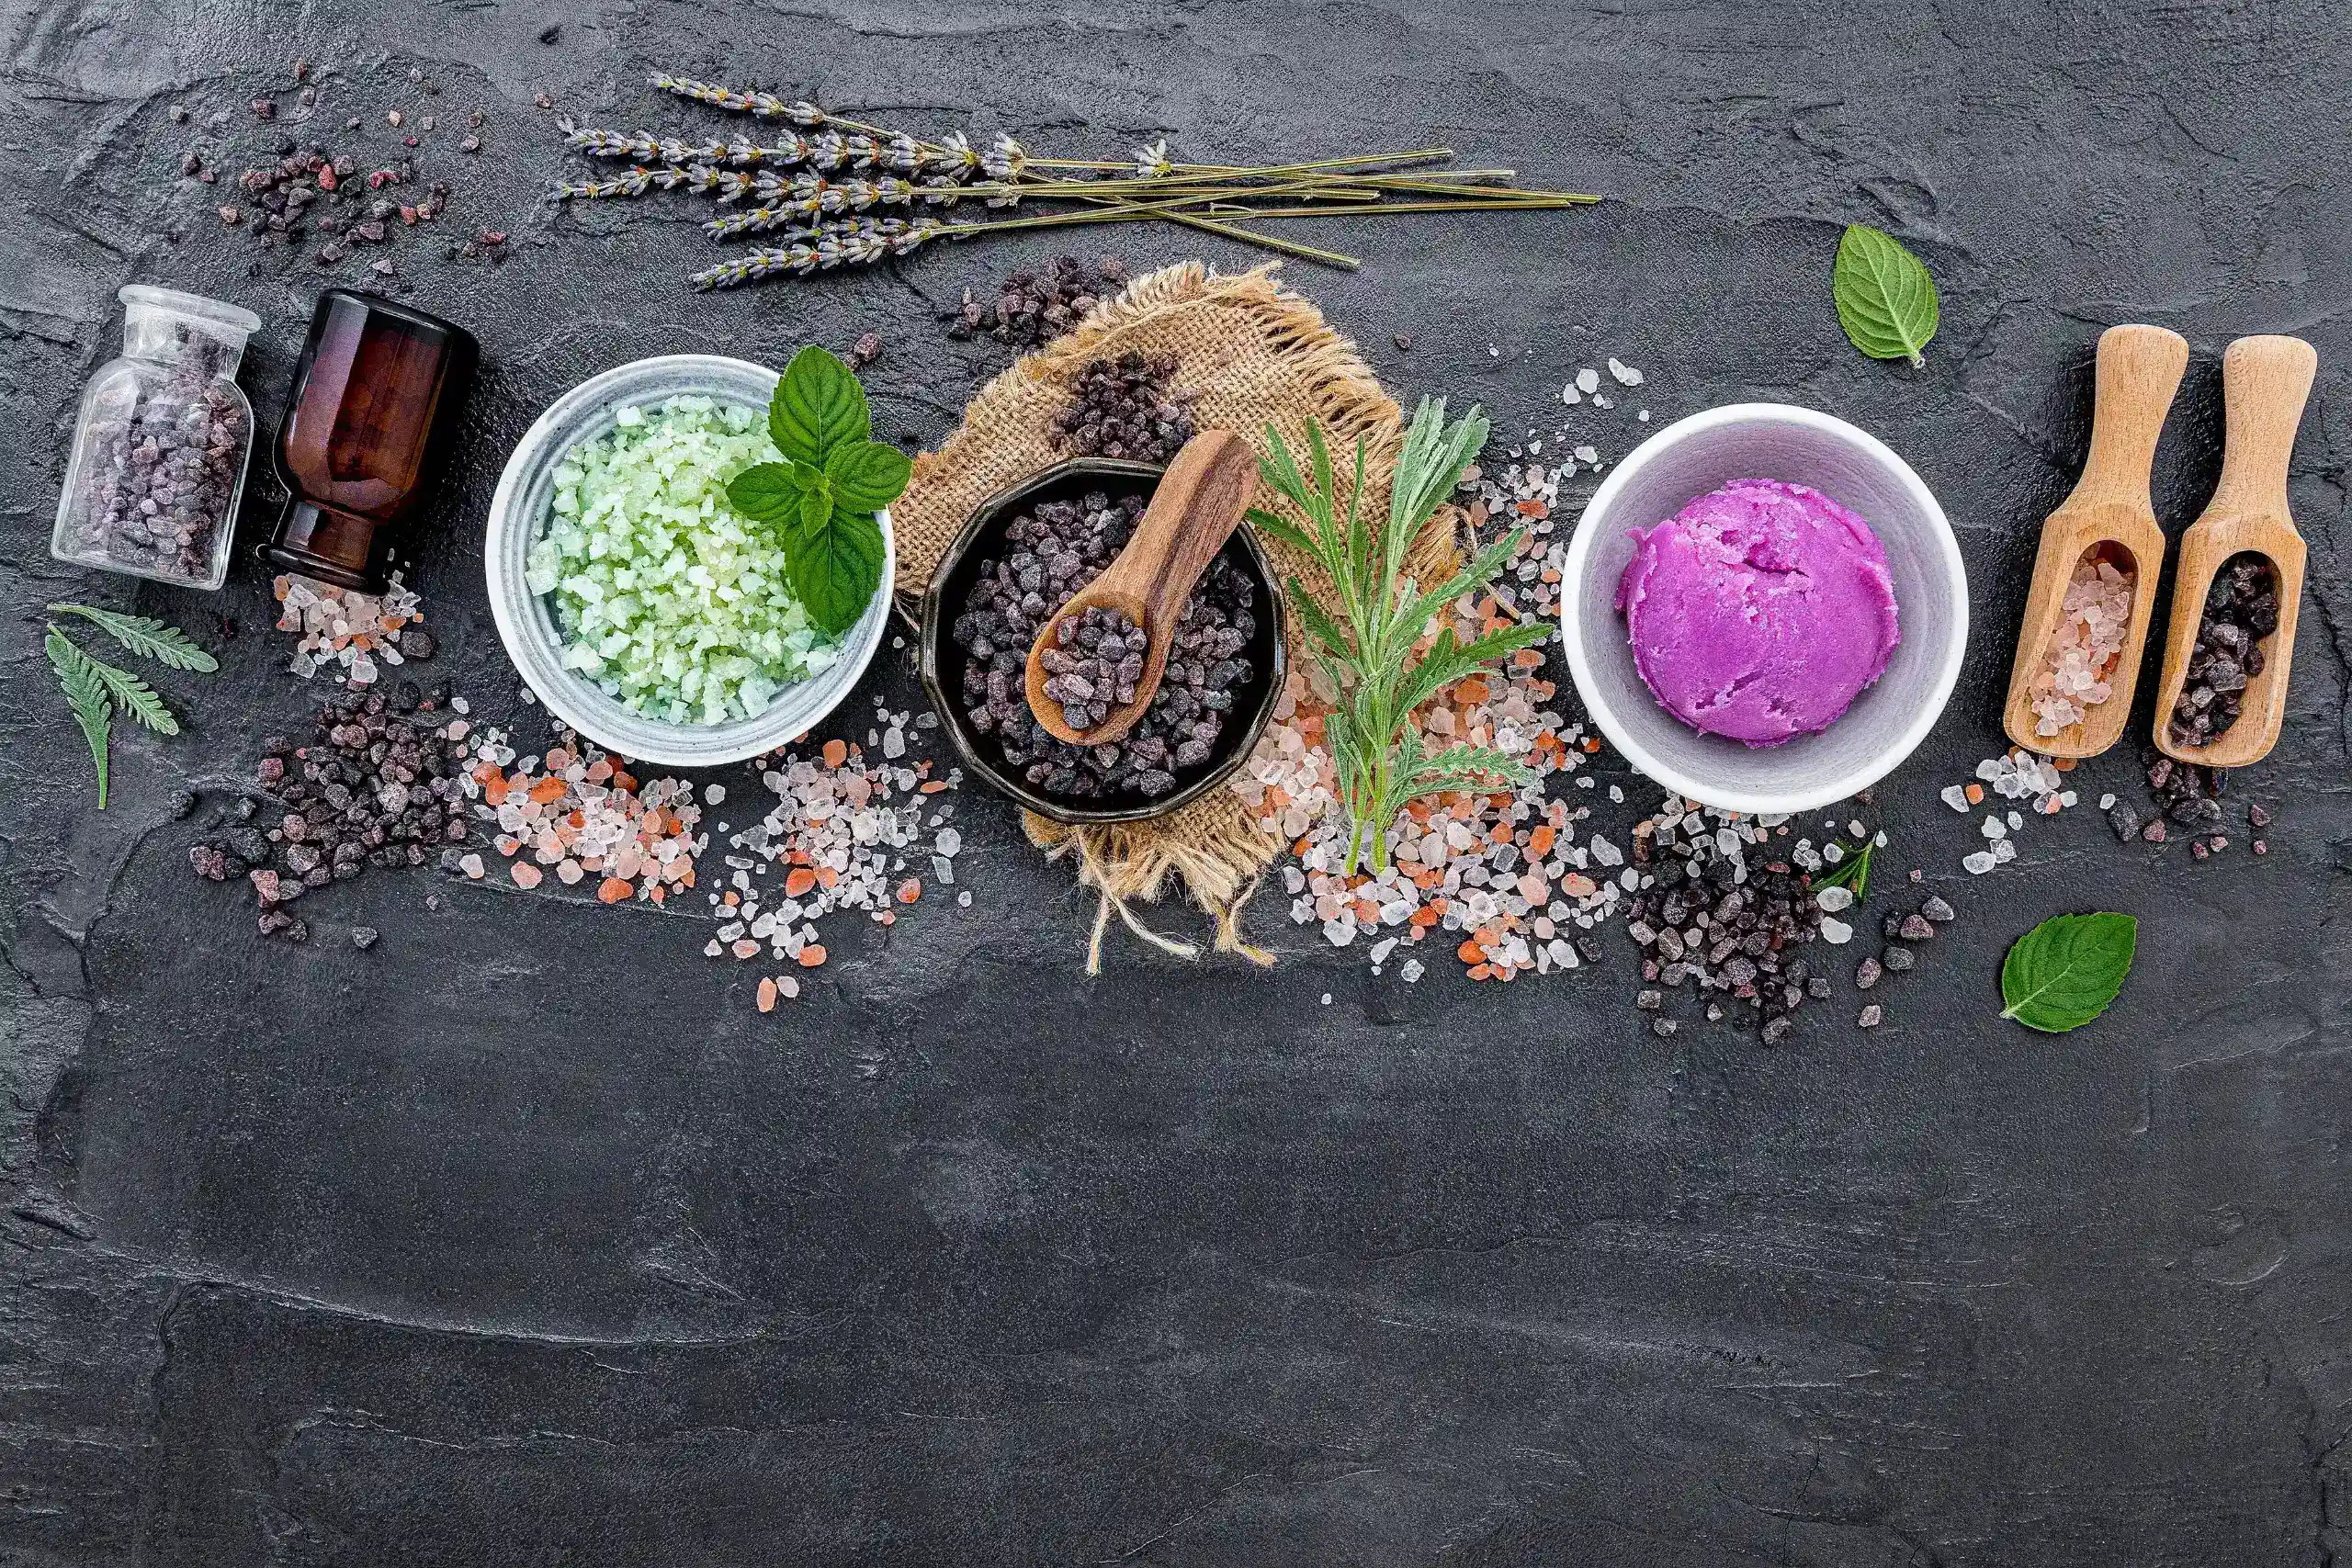 Assorted Himalayan bath salt varieties including mint, lavender, natural, and black salt in scoops and bottles